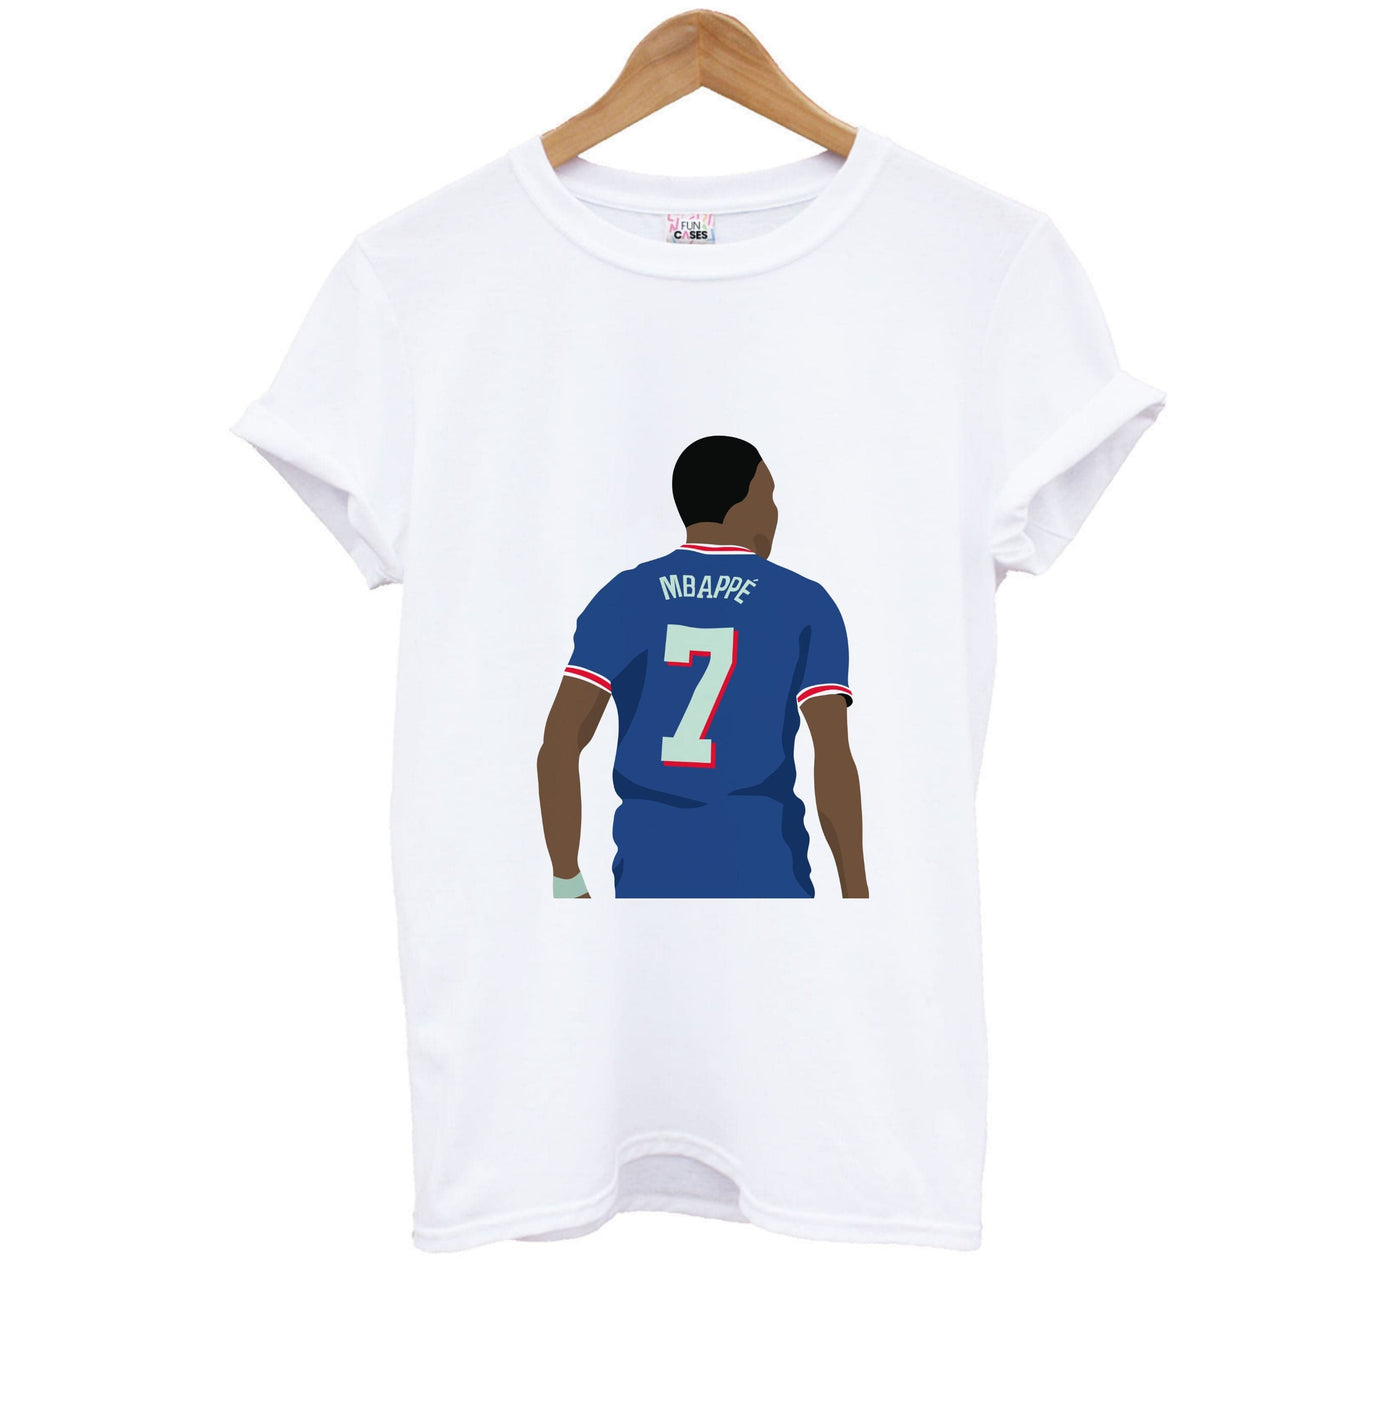 Mbappe - Football Kids T-Shirt